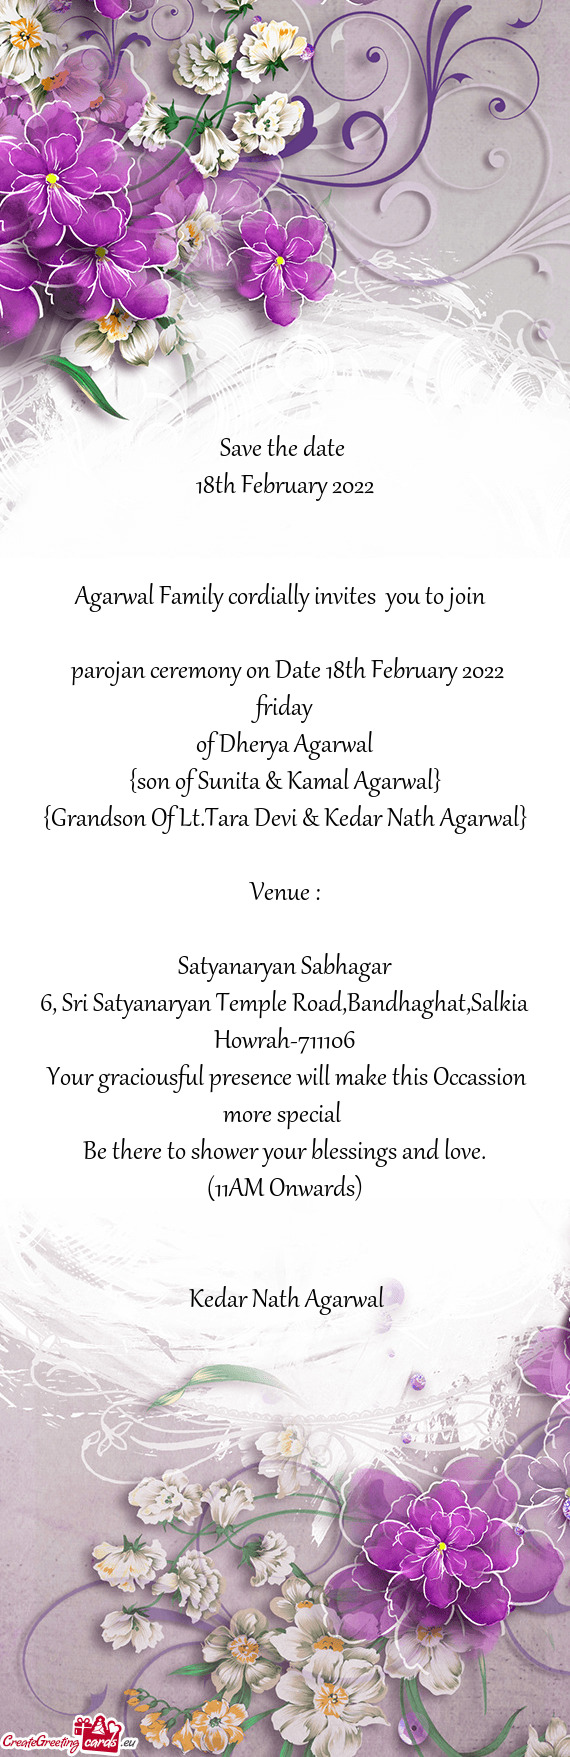 Parojan ceremony on Date 18th February 2022 friday